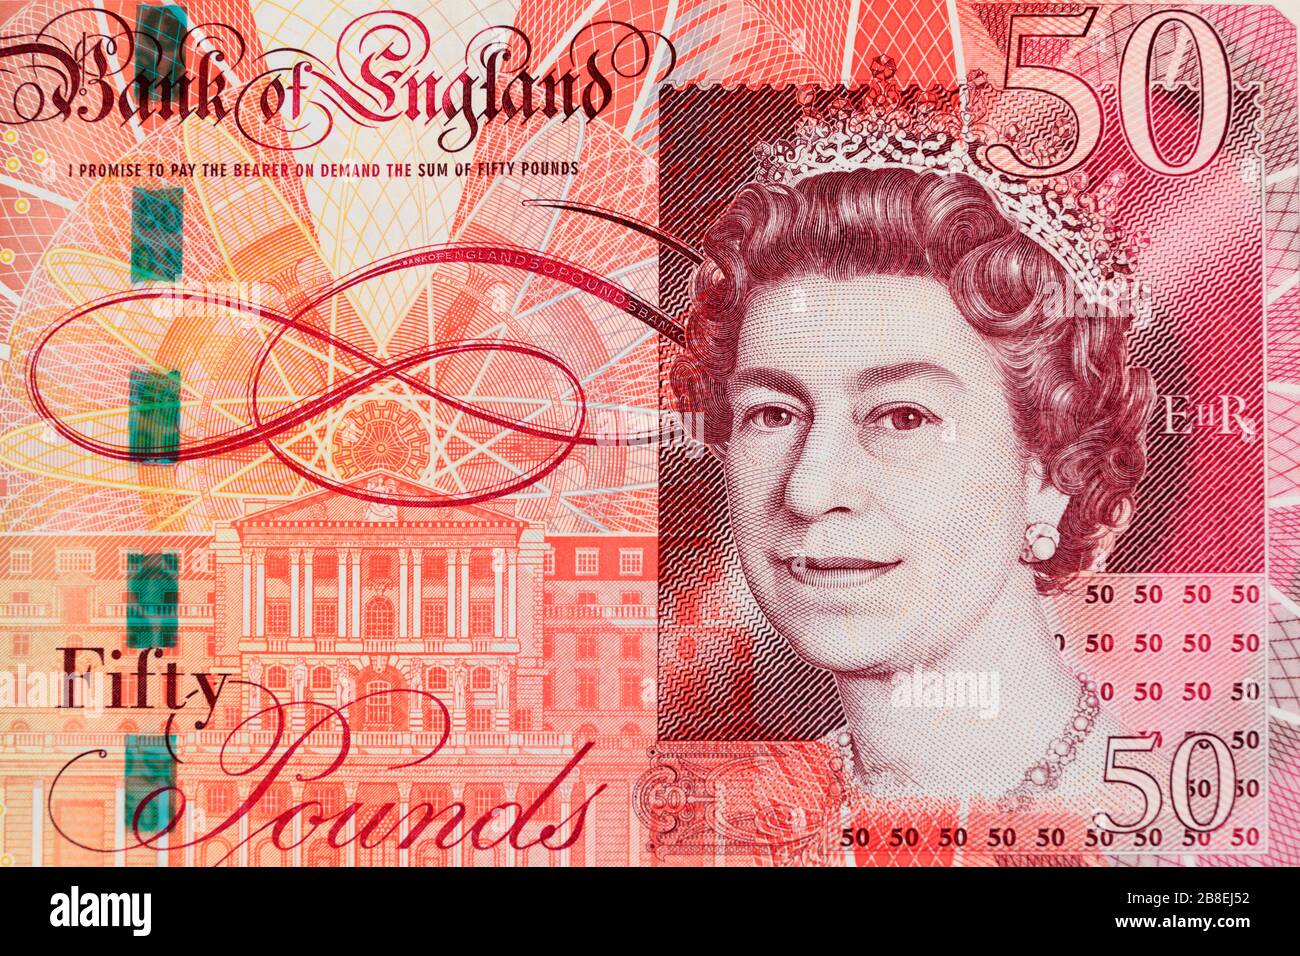 Bank of England 50 Pound note Stock Photo